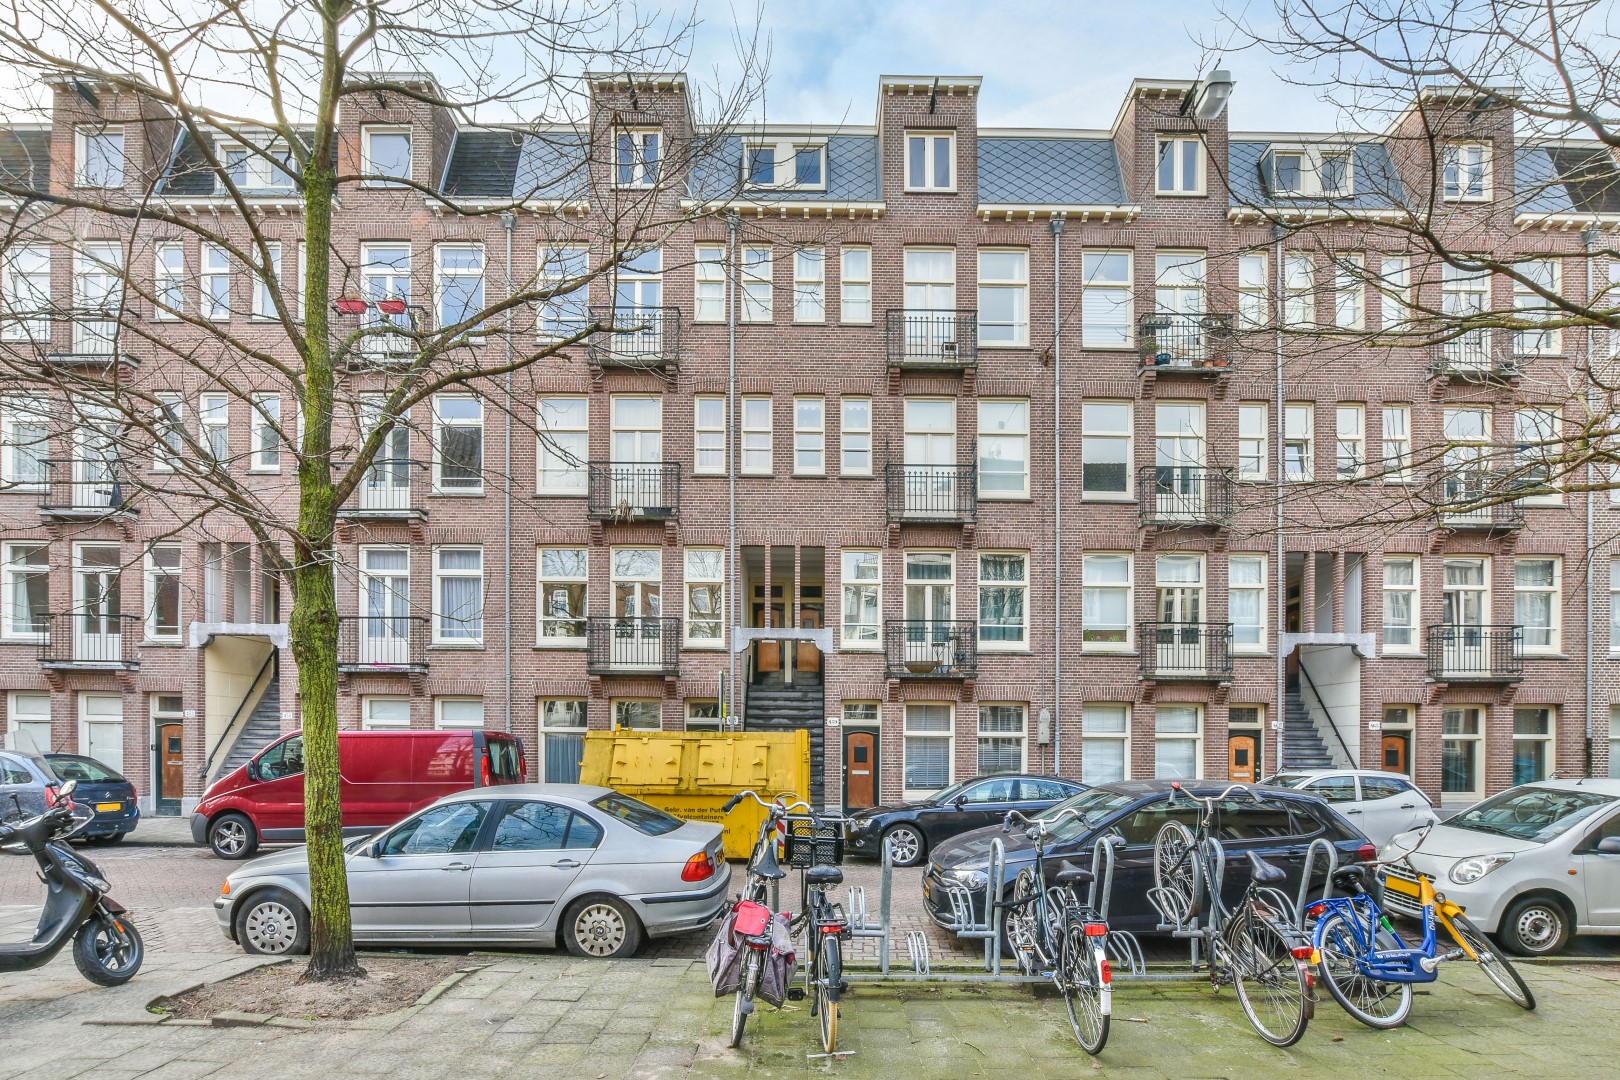 Rustenburgerstraat 457 I 1072 HB, Amsterdam, Noord-Holland Netherlands, 2 Slaapkamers Slaapkamers, ,1 BadkamerBadkamers,Appartement,Huur,Rustenburgerstraat,1,1562